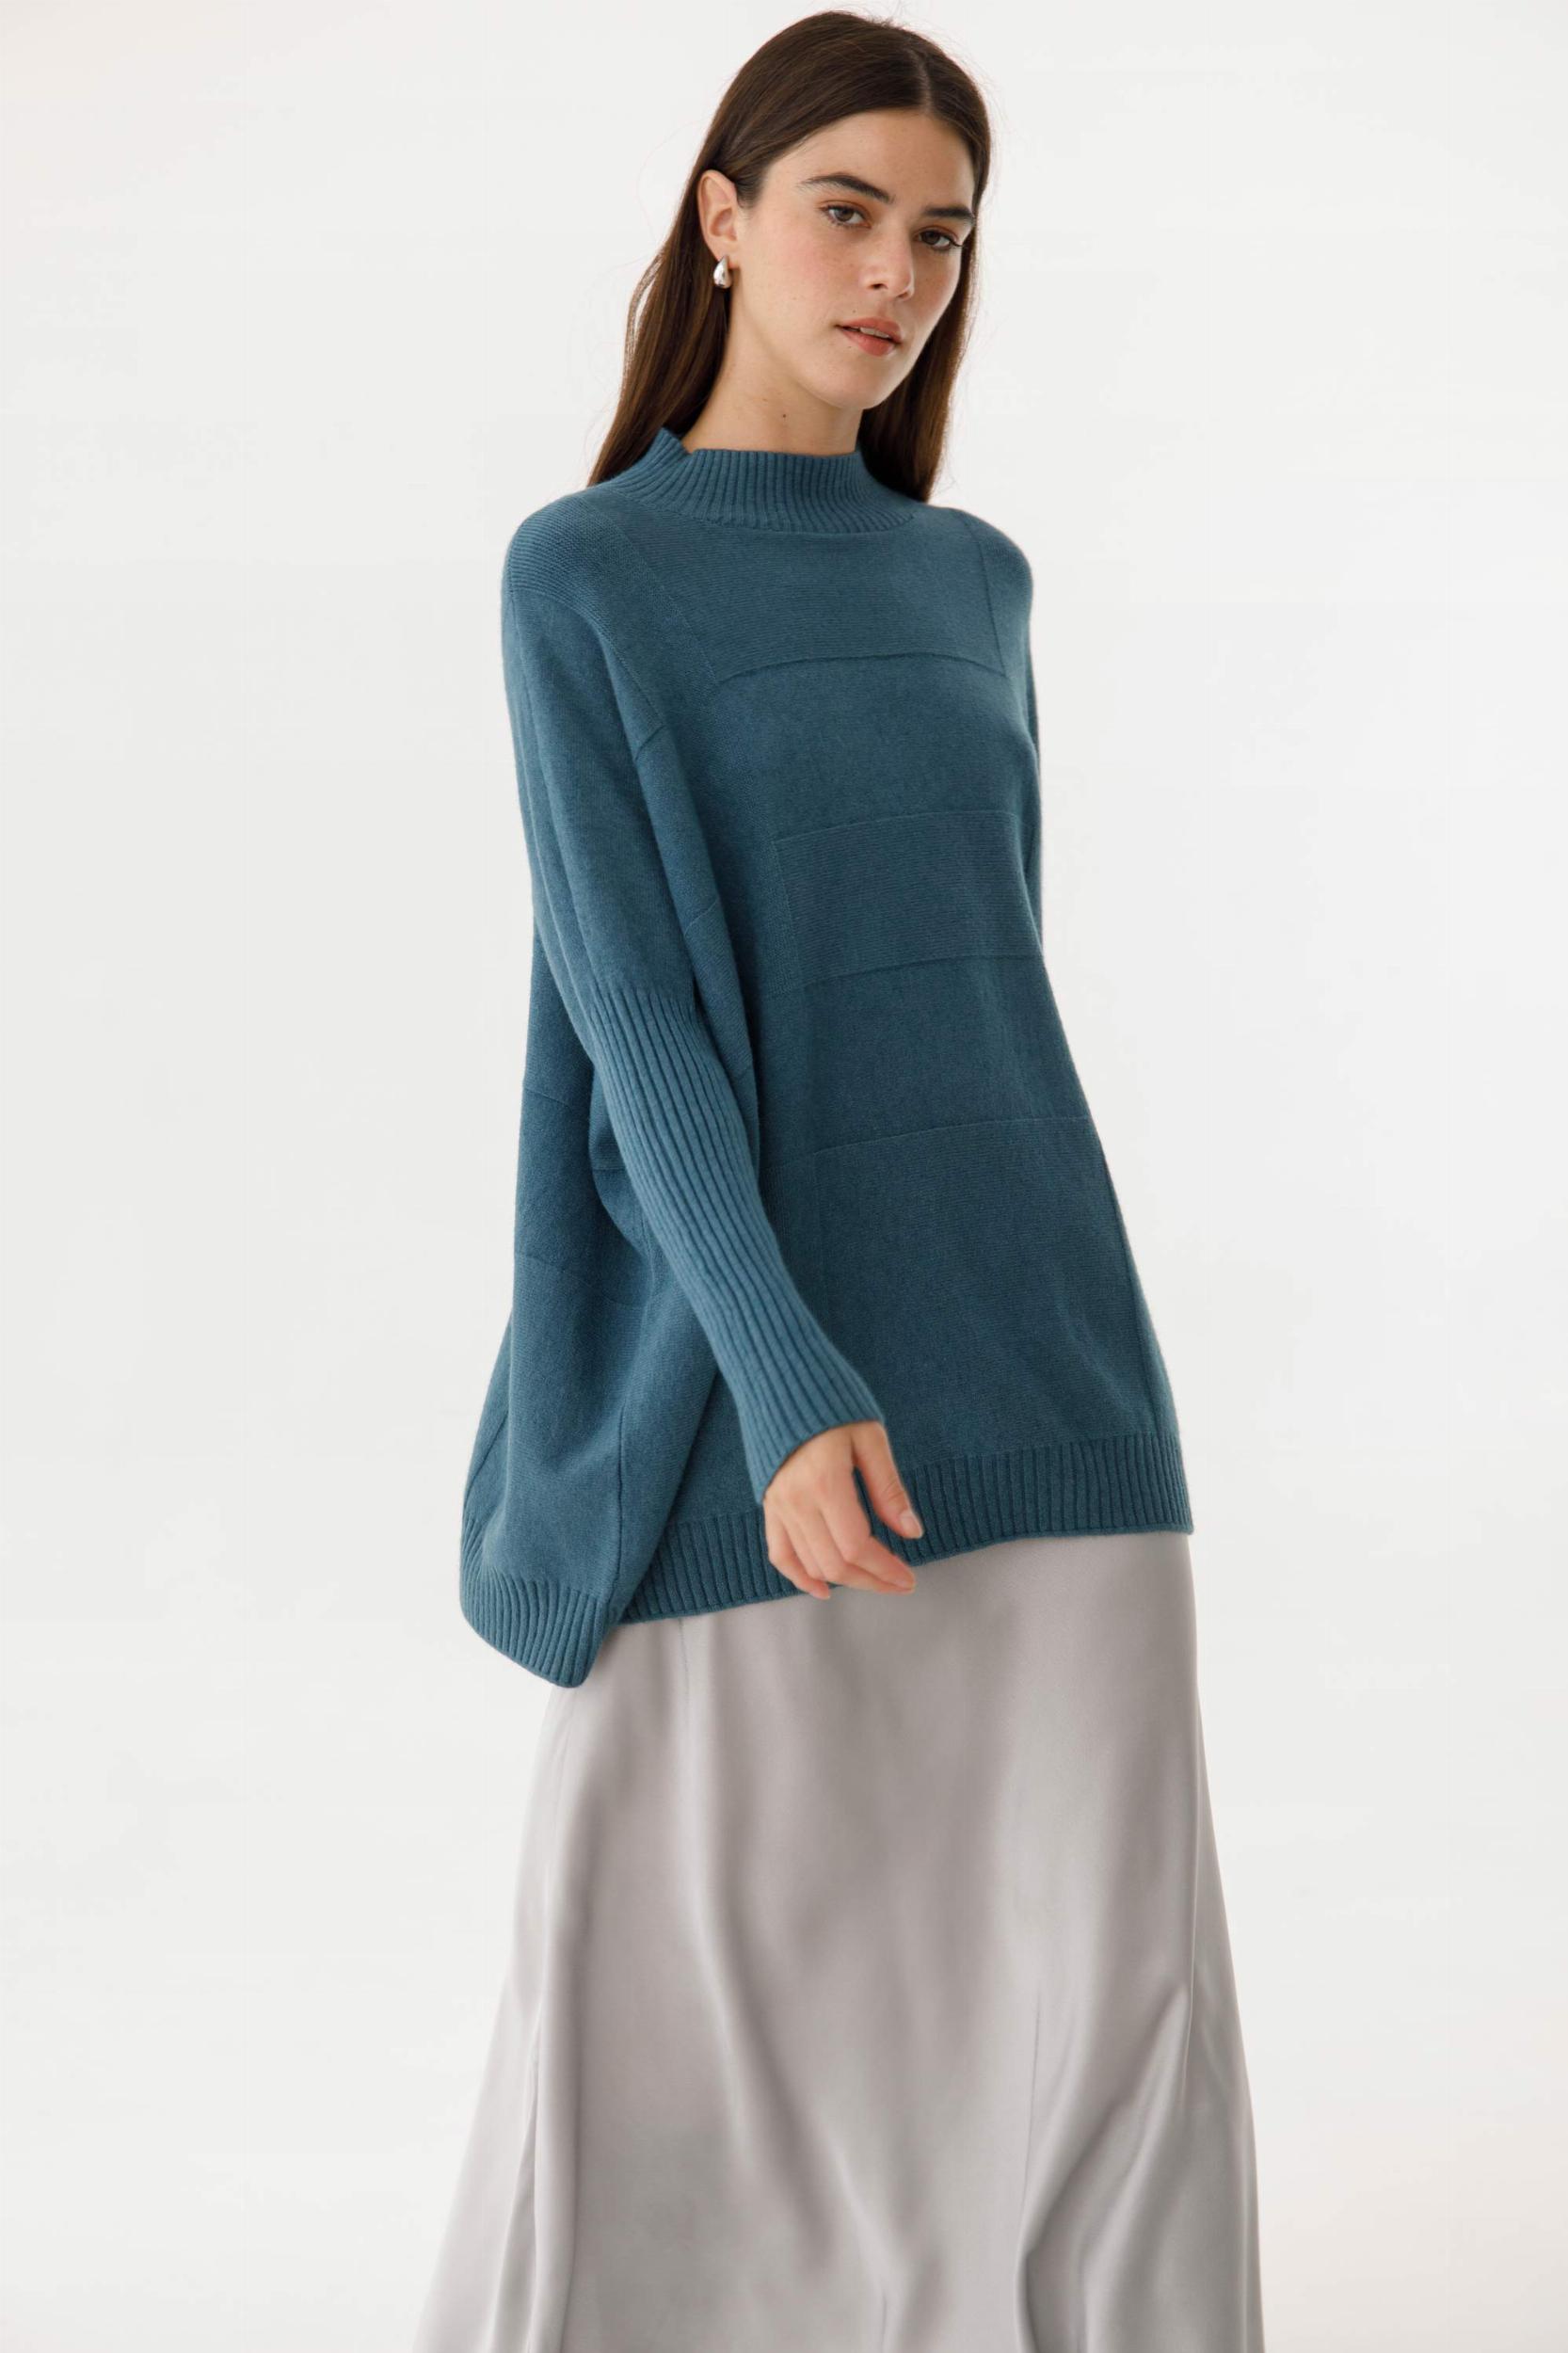 Sweater Emma azul piedra talle unico